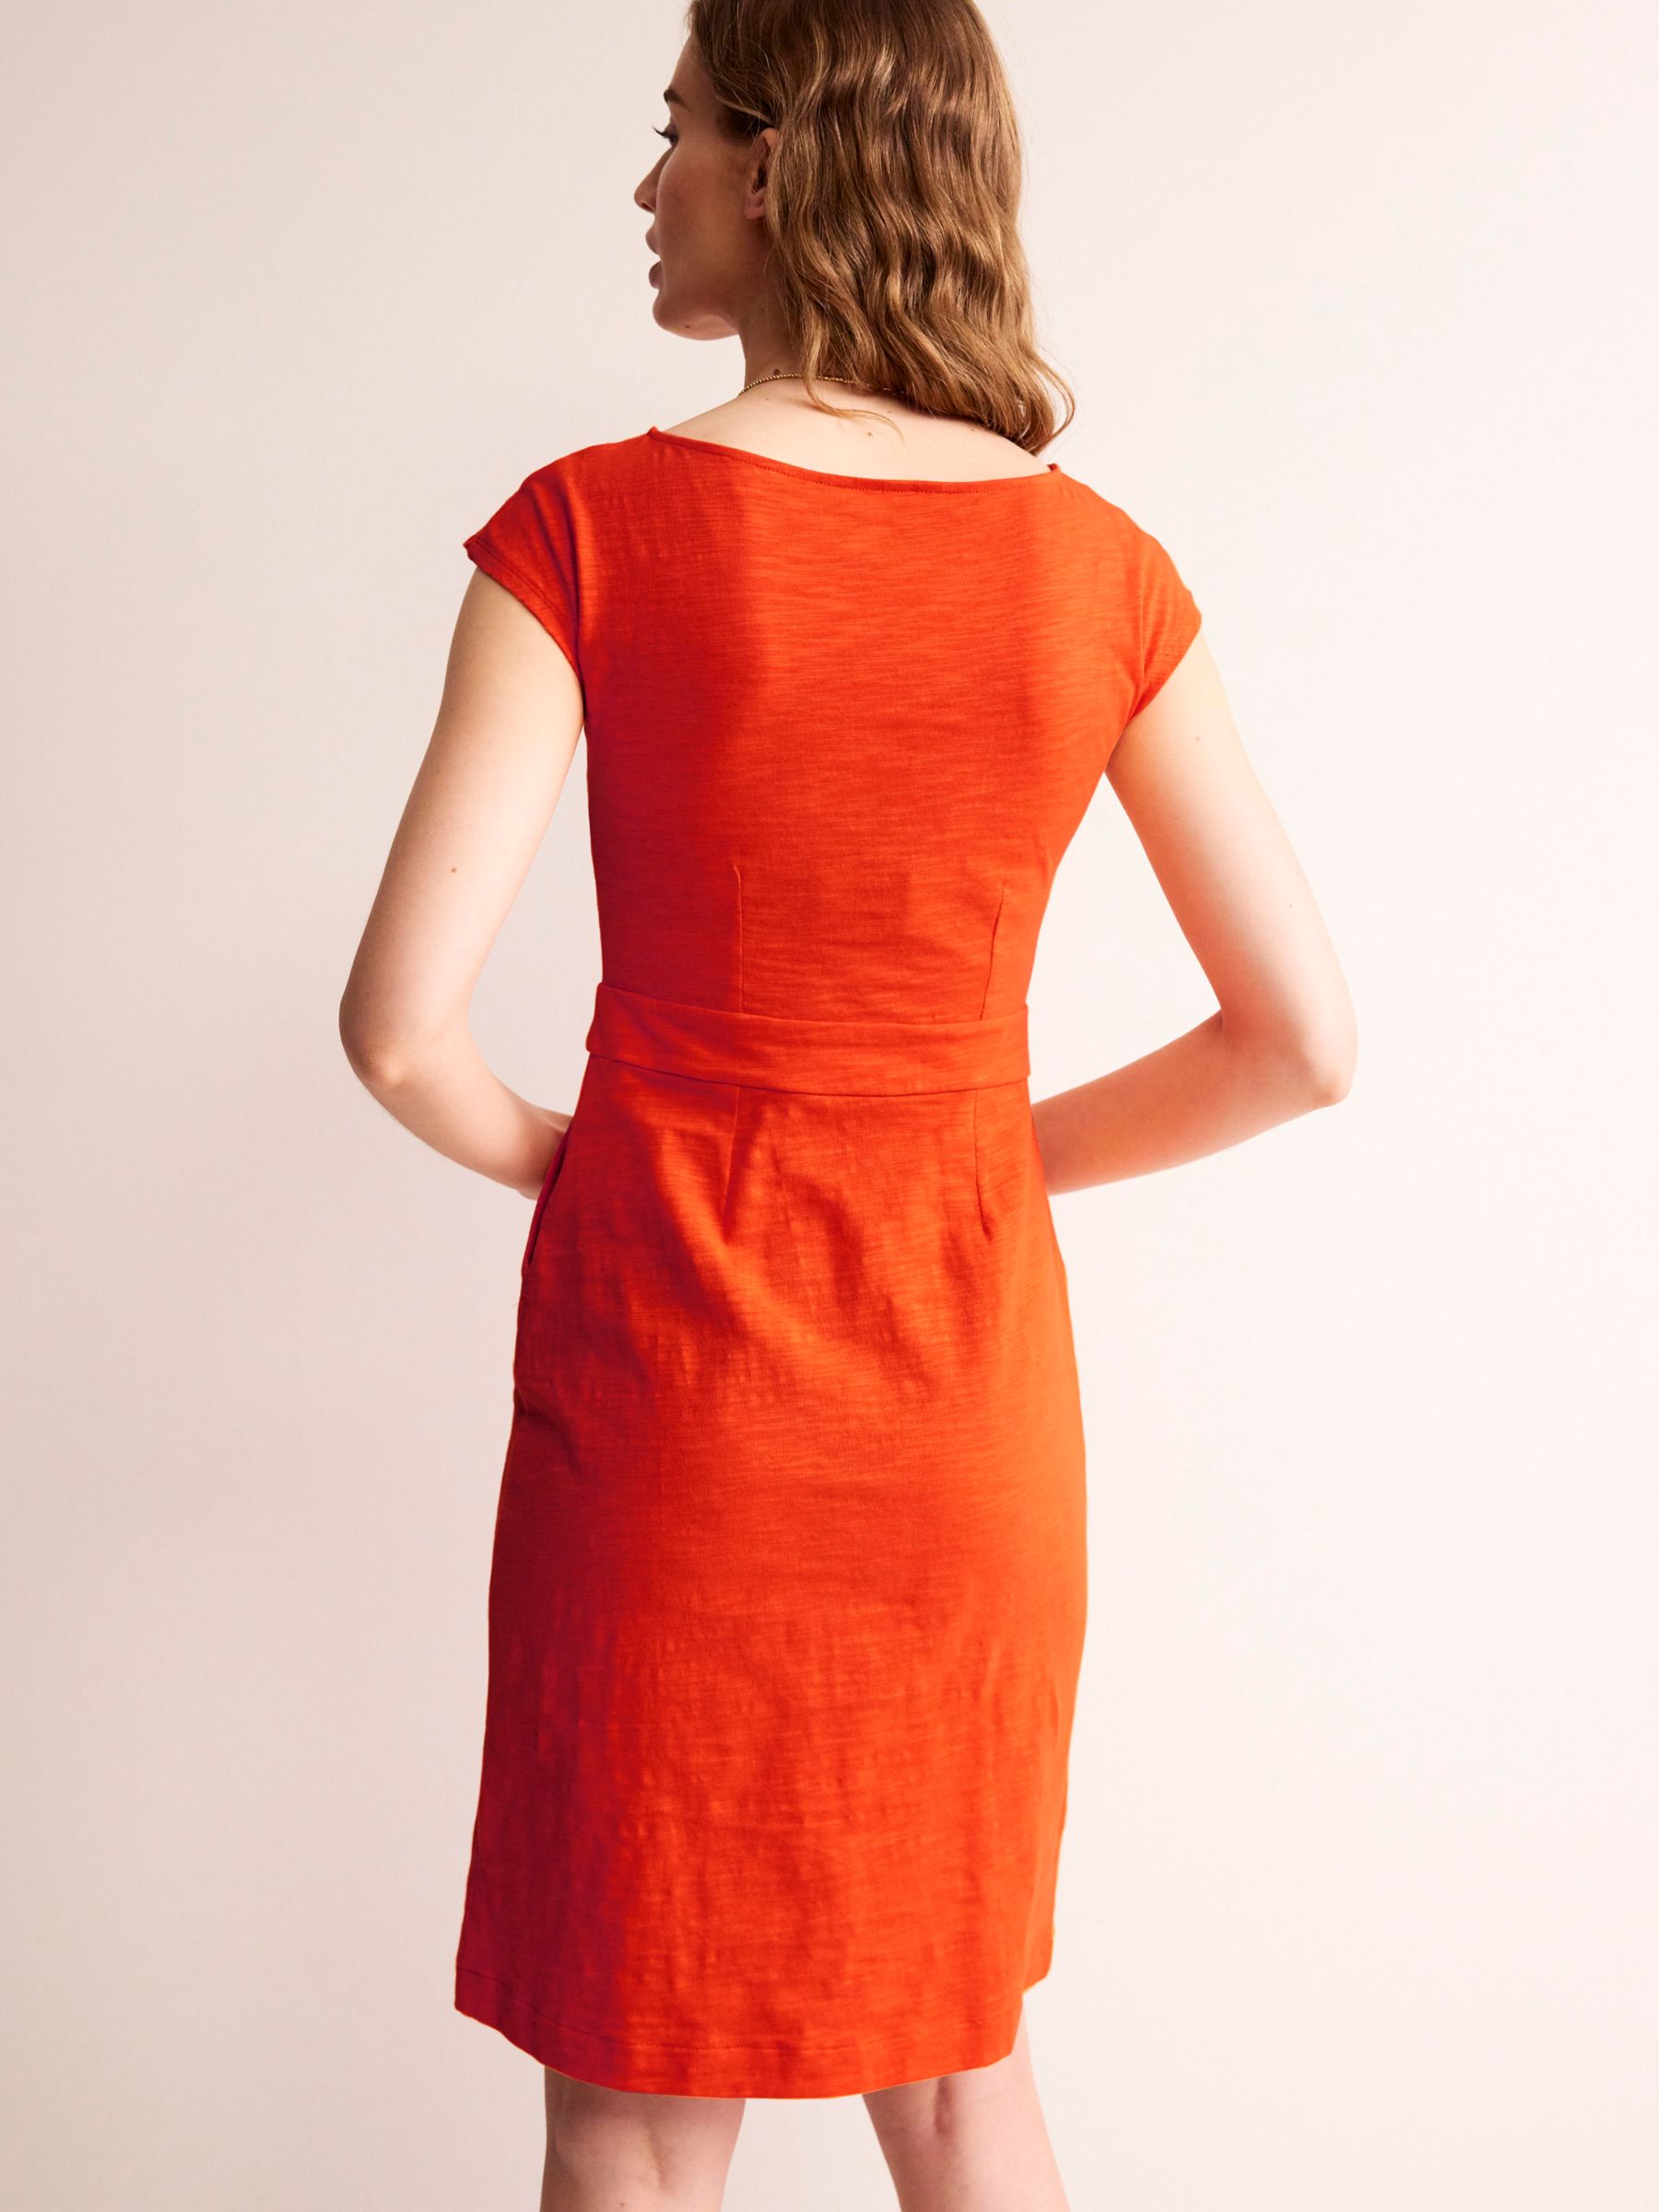 Boden Florrie Broderie Jersey Dress, Mandarin Orange, 8